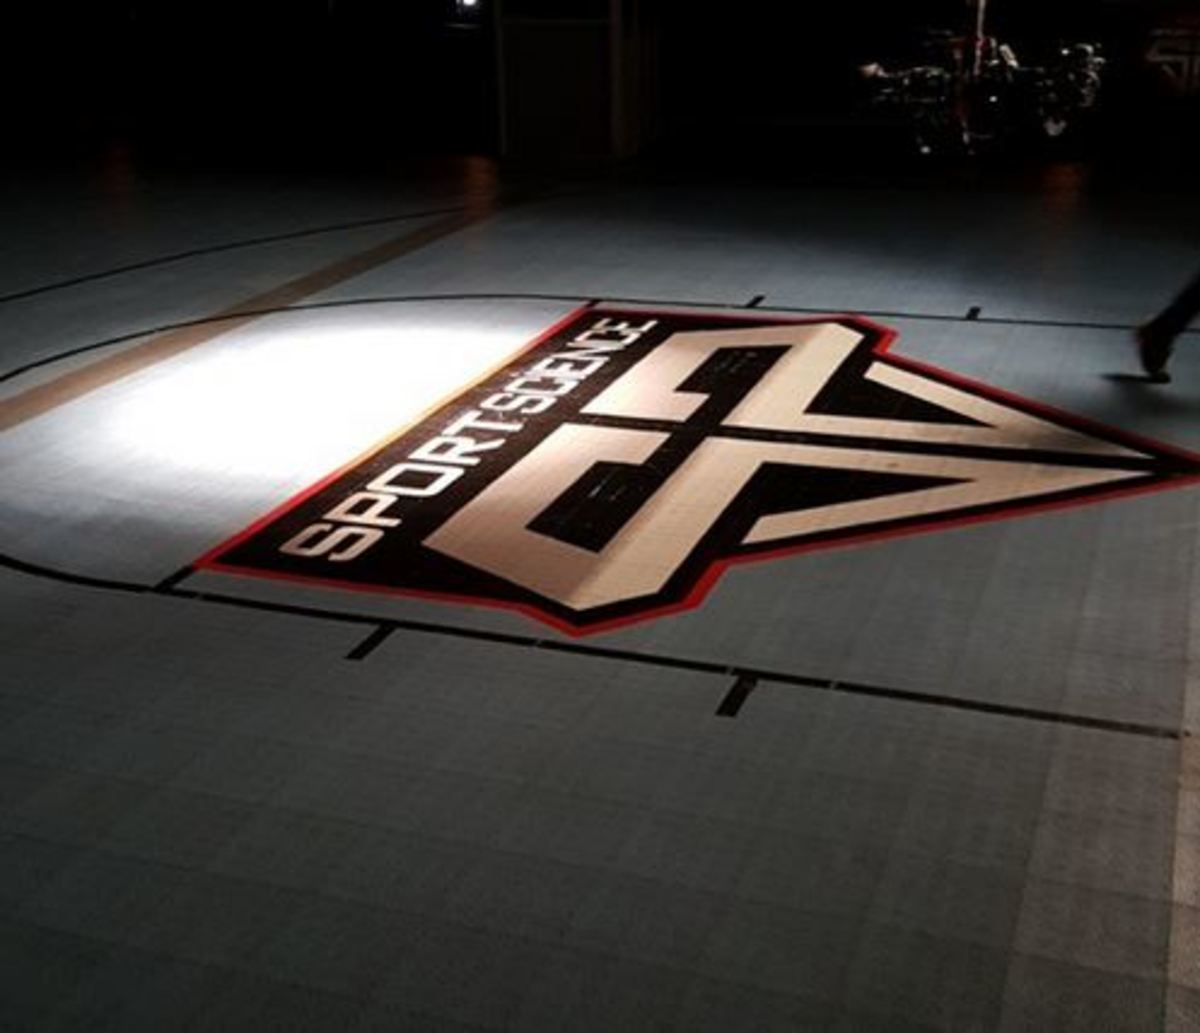 SportsScience basketball floor with logo.